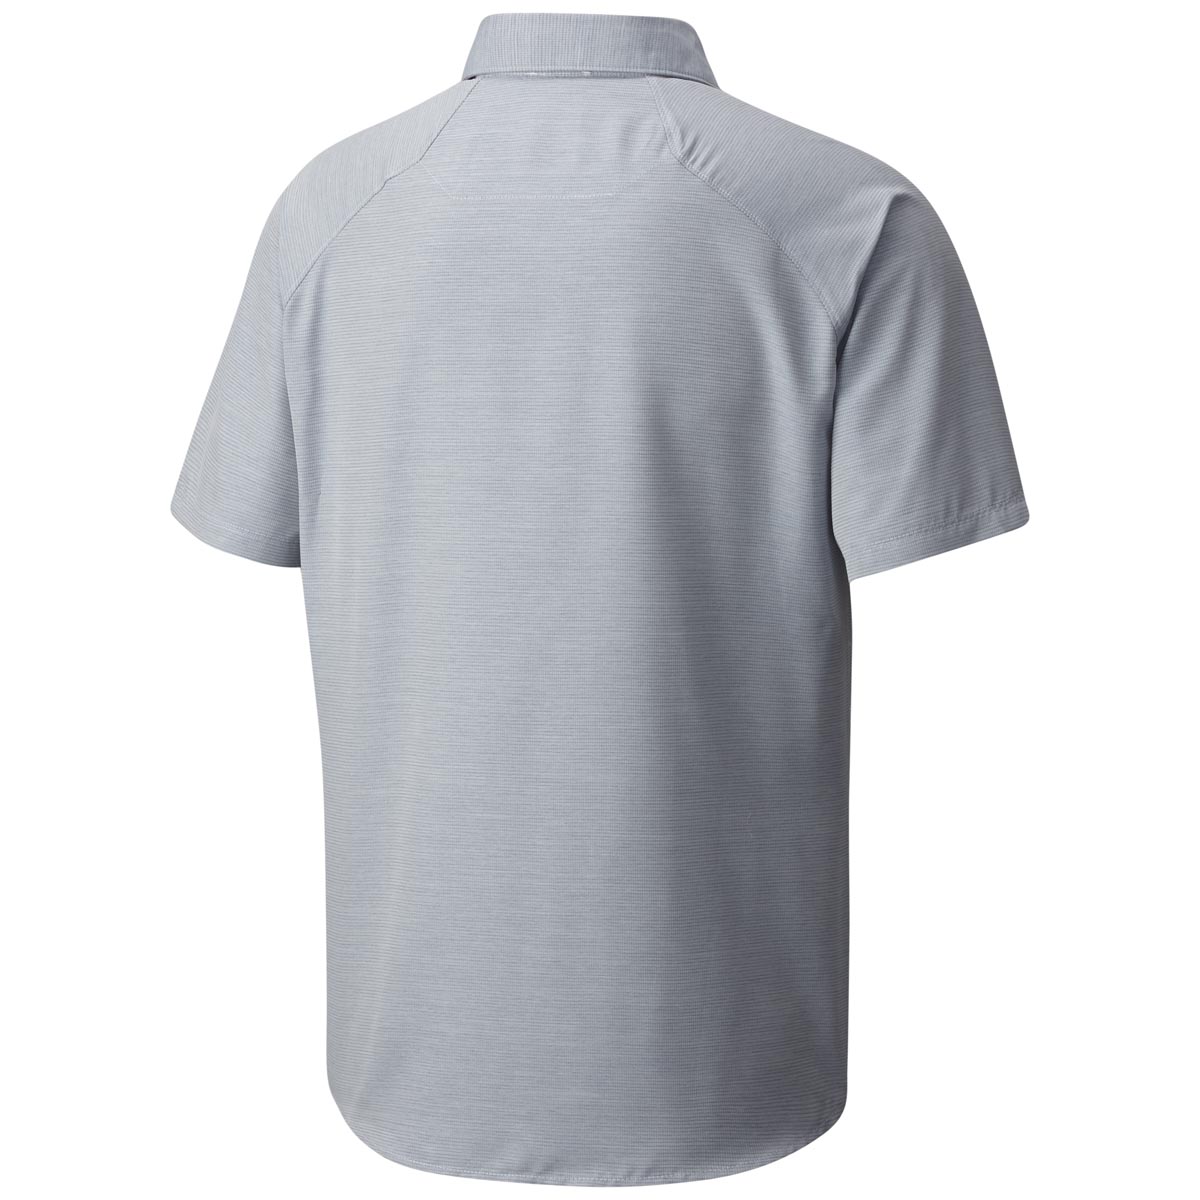 Mountain Hardwear Men's Technician Short Sleeve Shirt